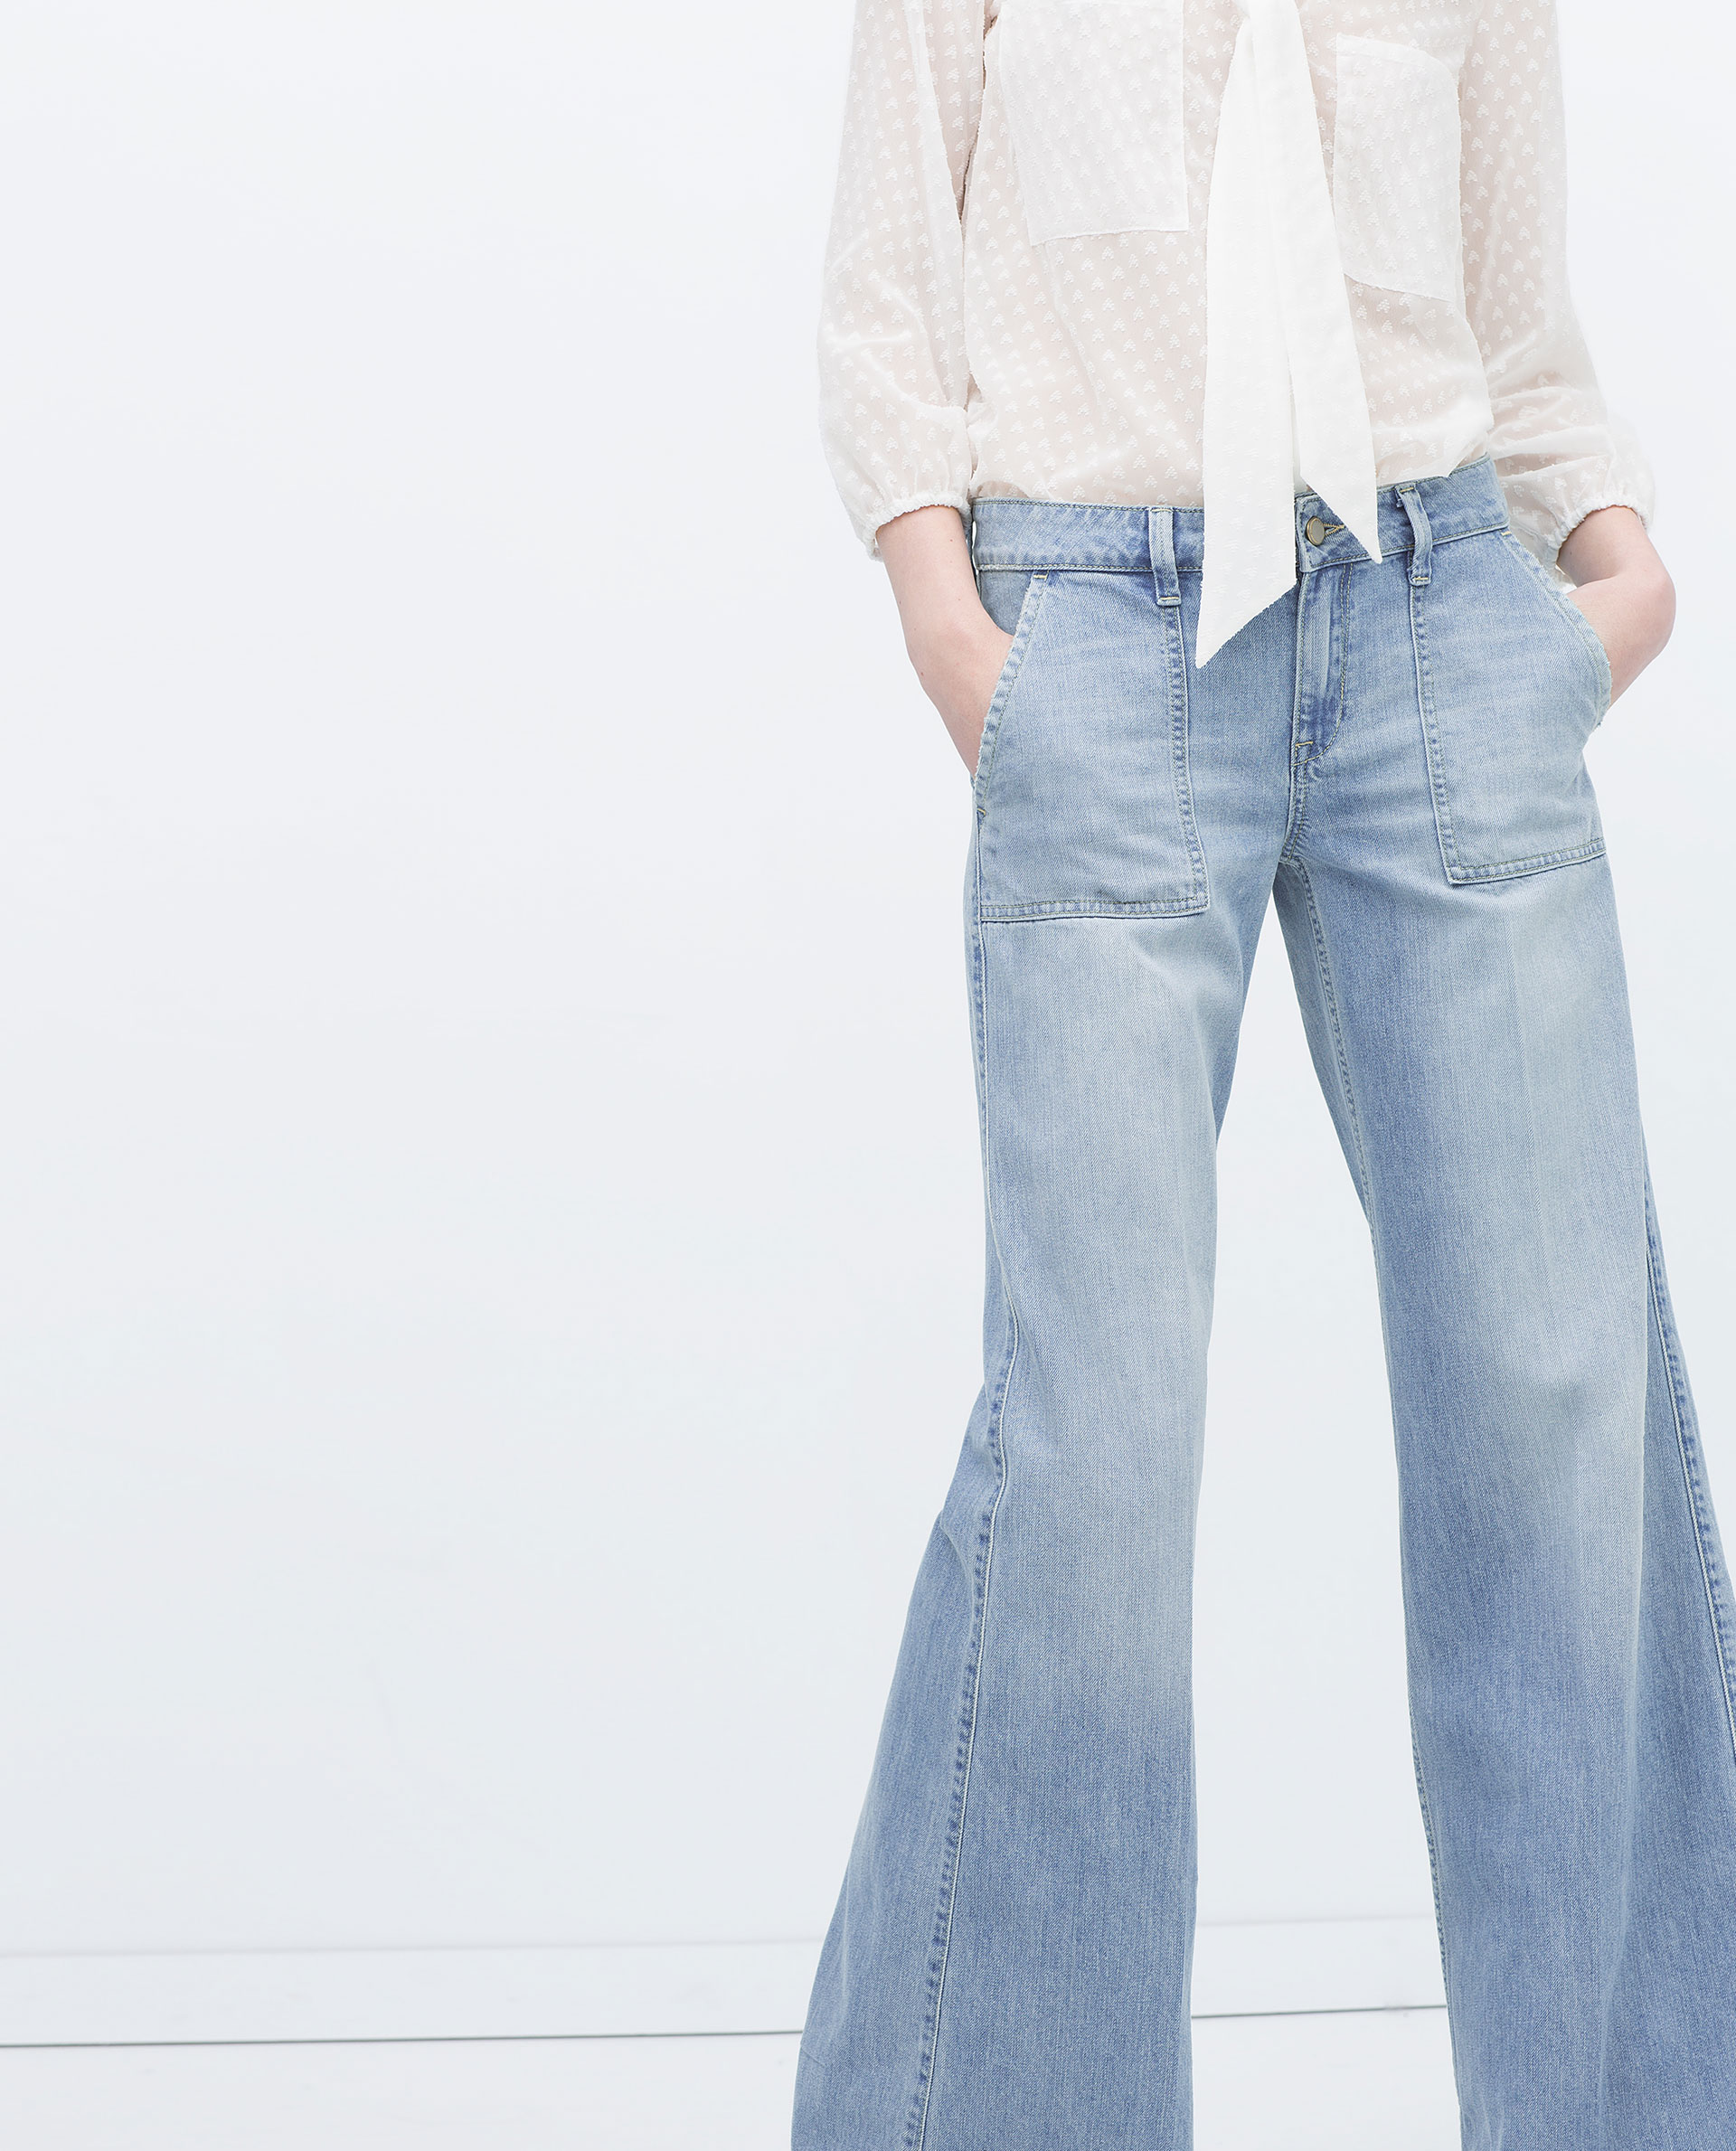 Square pocket jeans.jpg